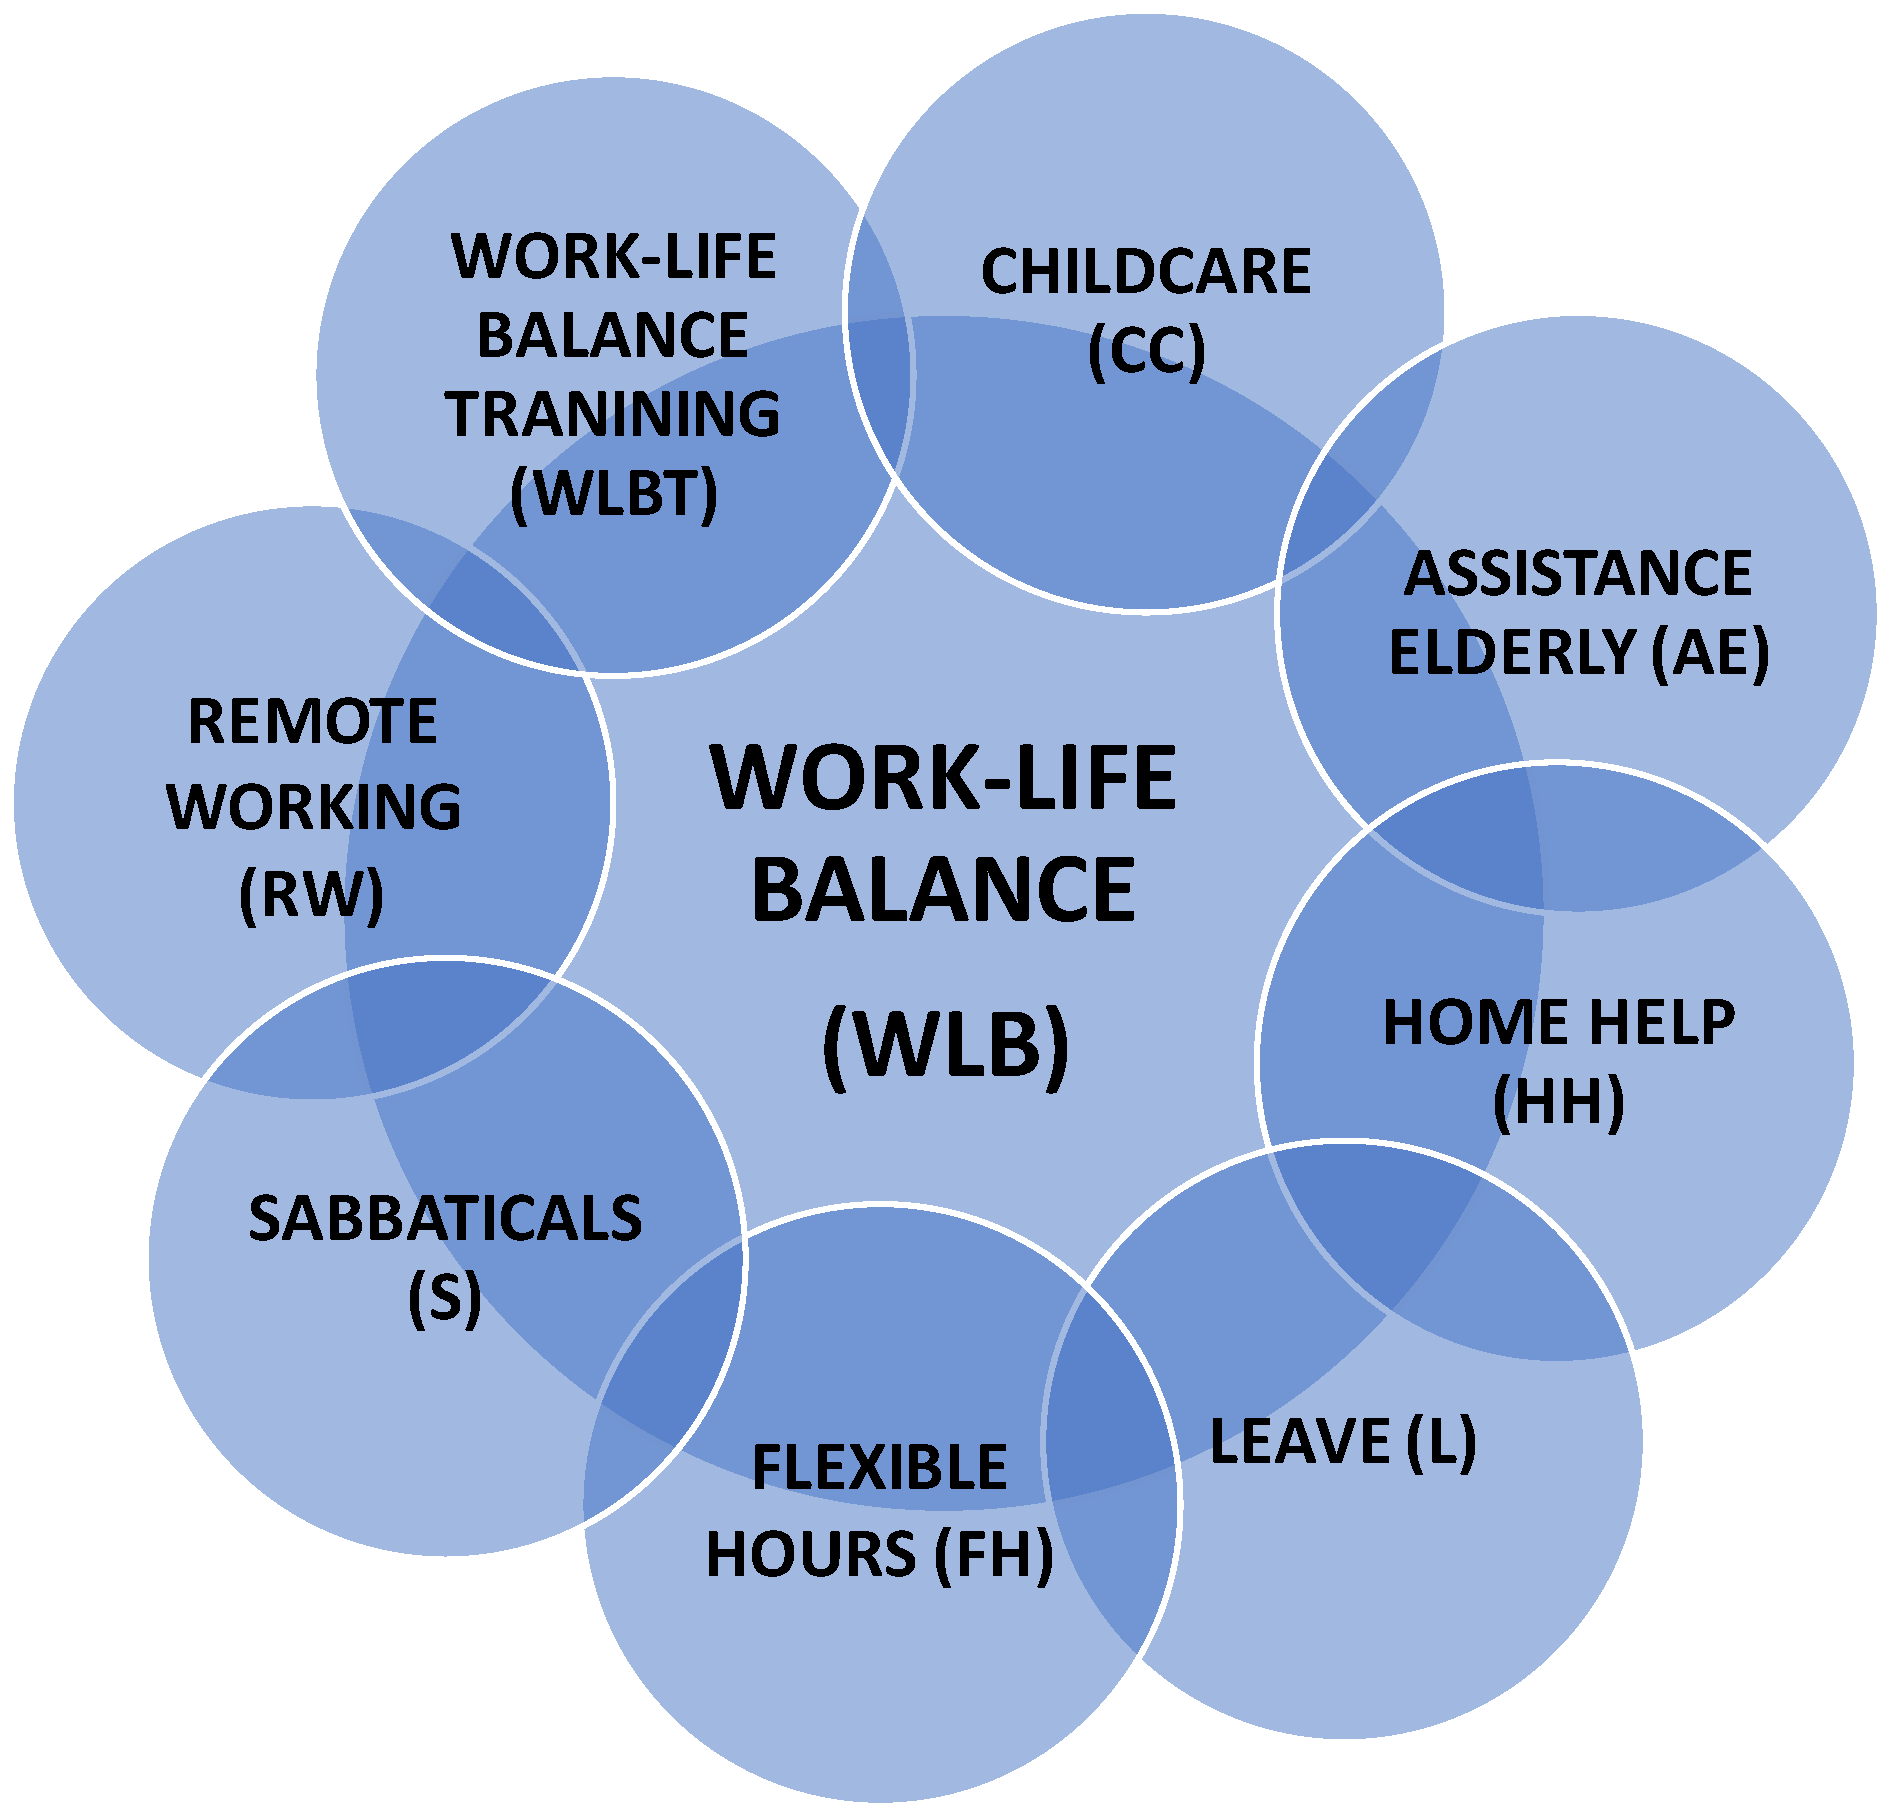 work life balance google